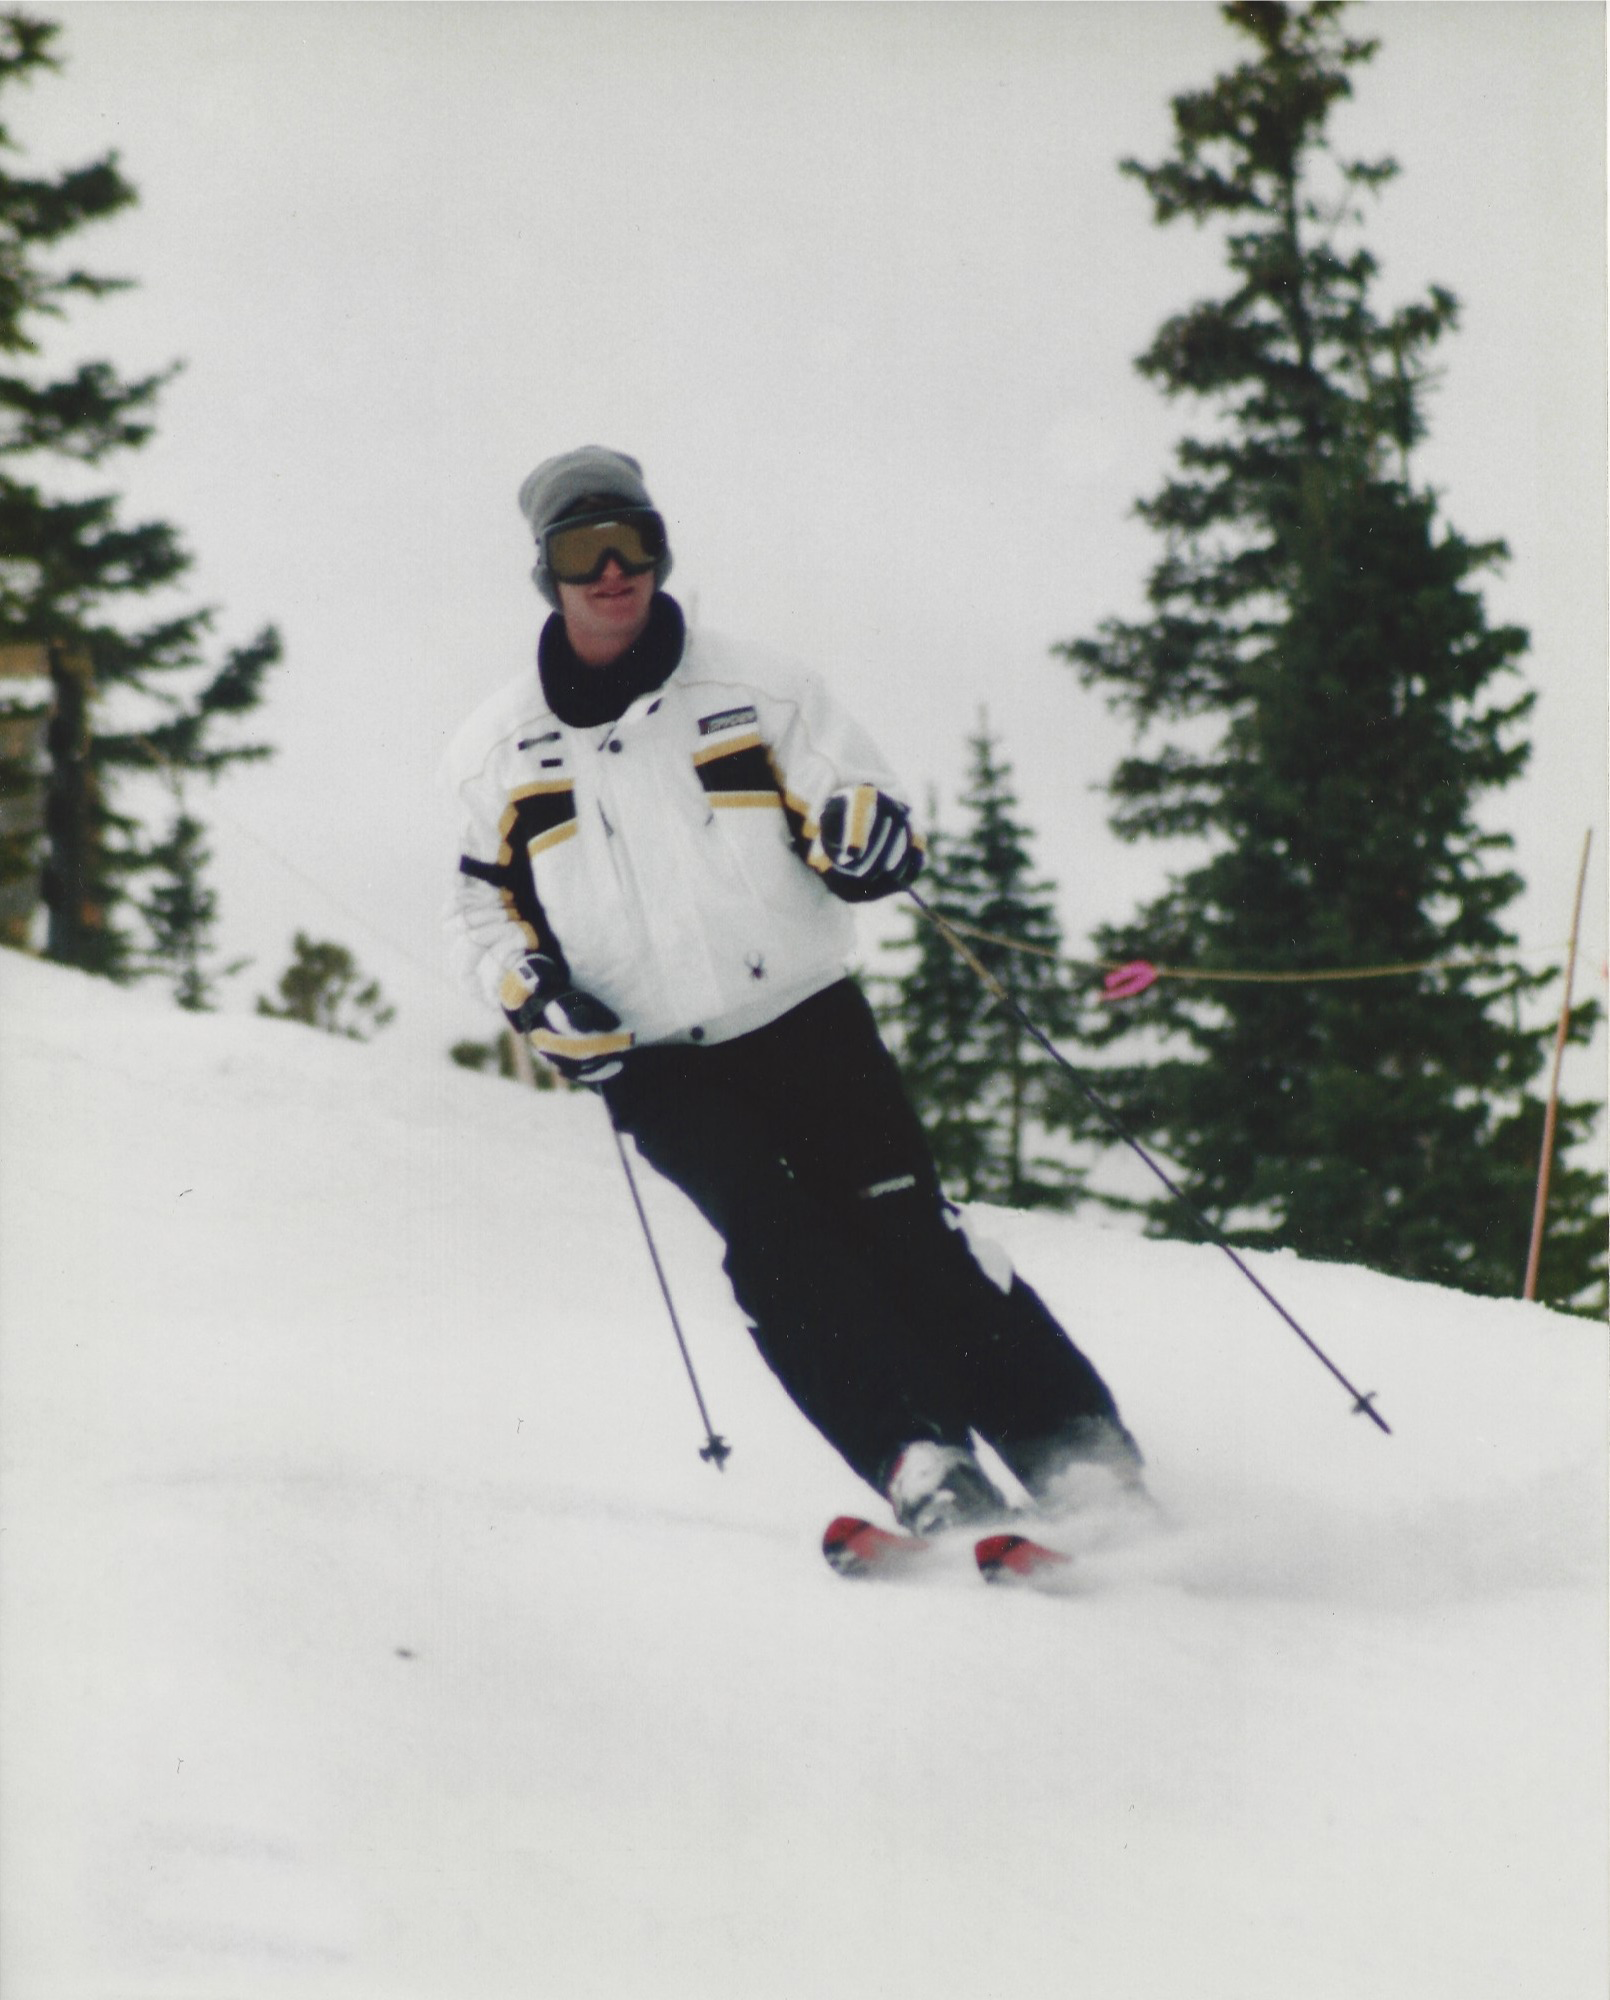 JC Skiing at Breckenridge, CO